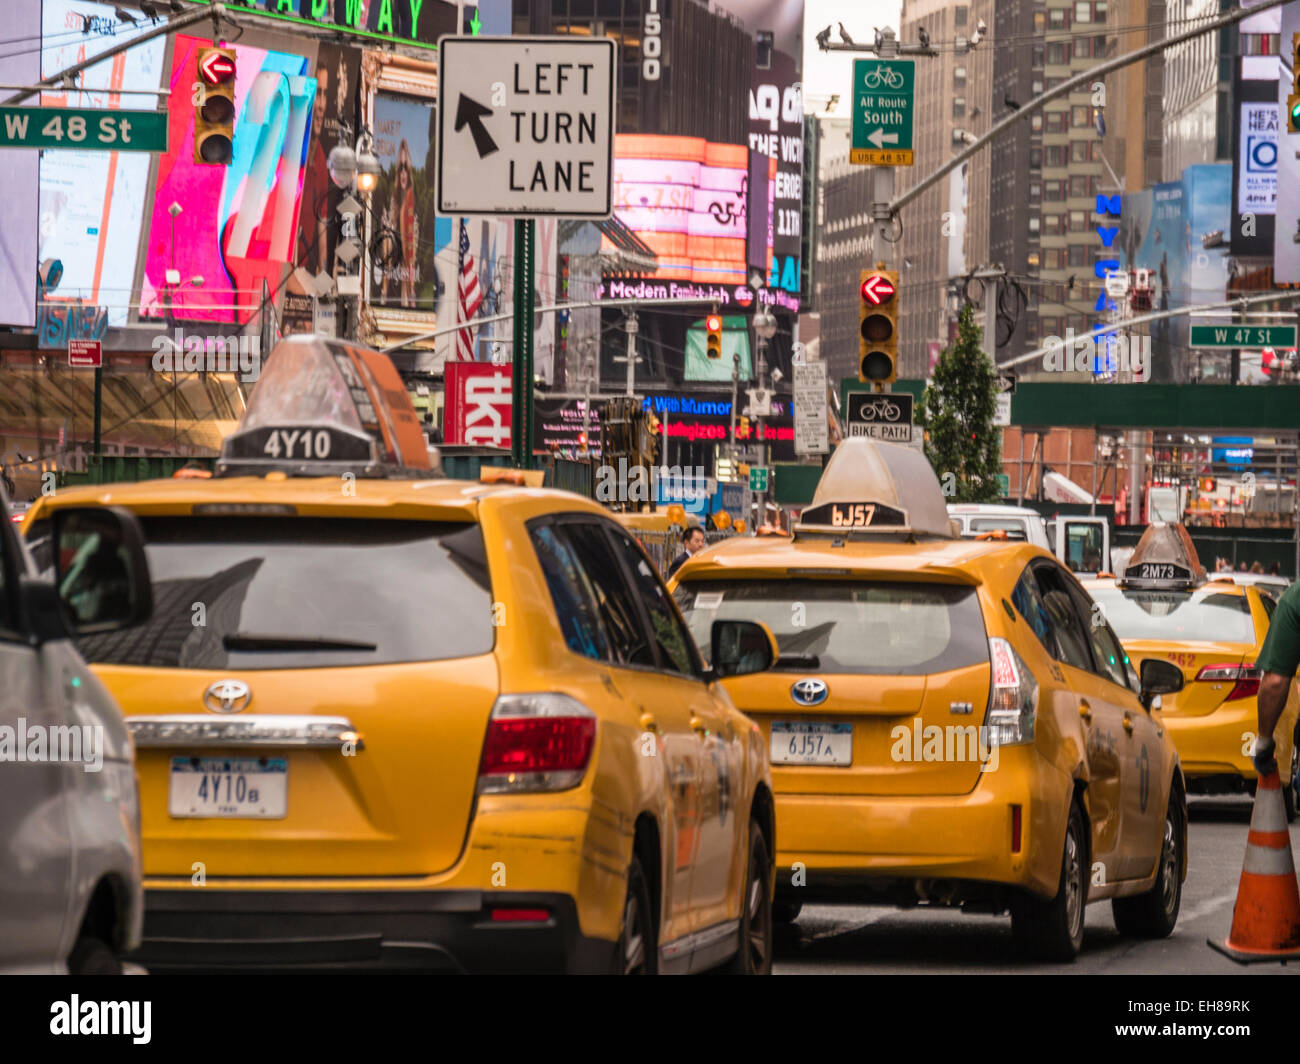 Times Square, Theatre District, Midtown, Manhattan, New York City, New York, United States of America, North America Stock Photo